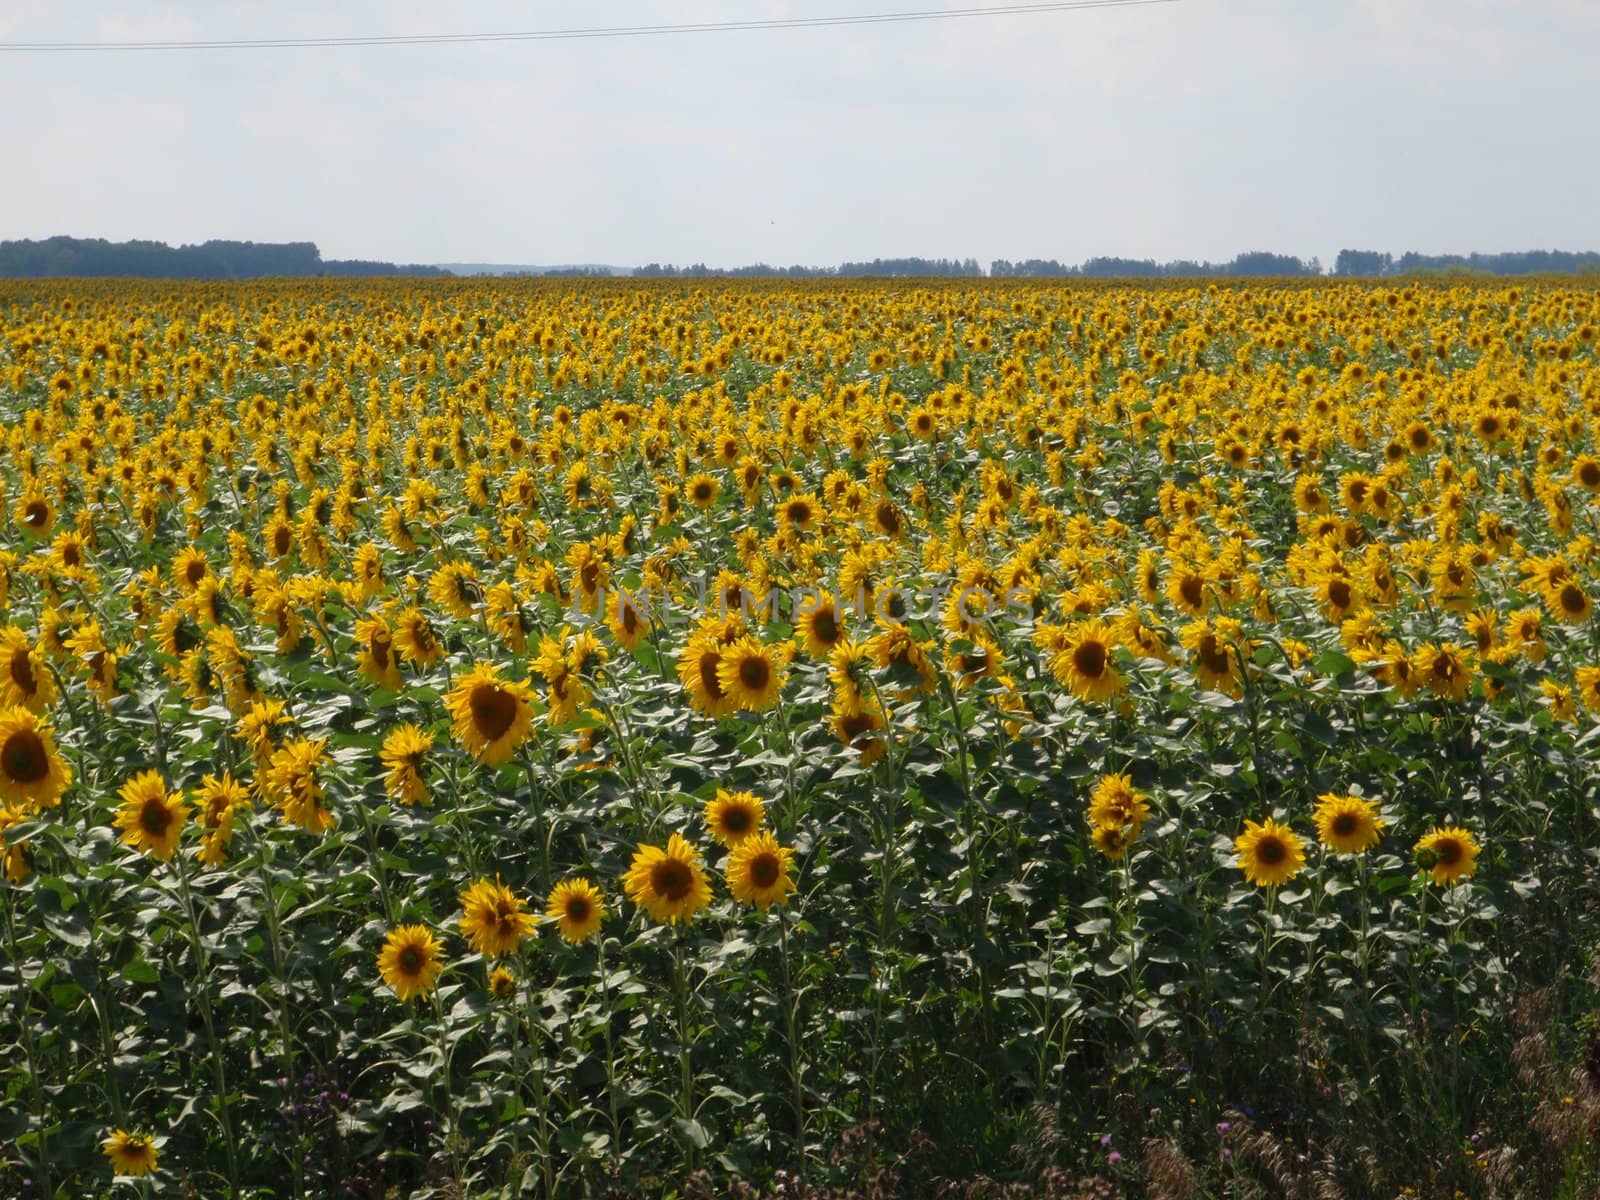 Field of sunflowers, nature of Bashkortostan, Russia